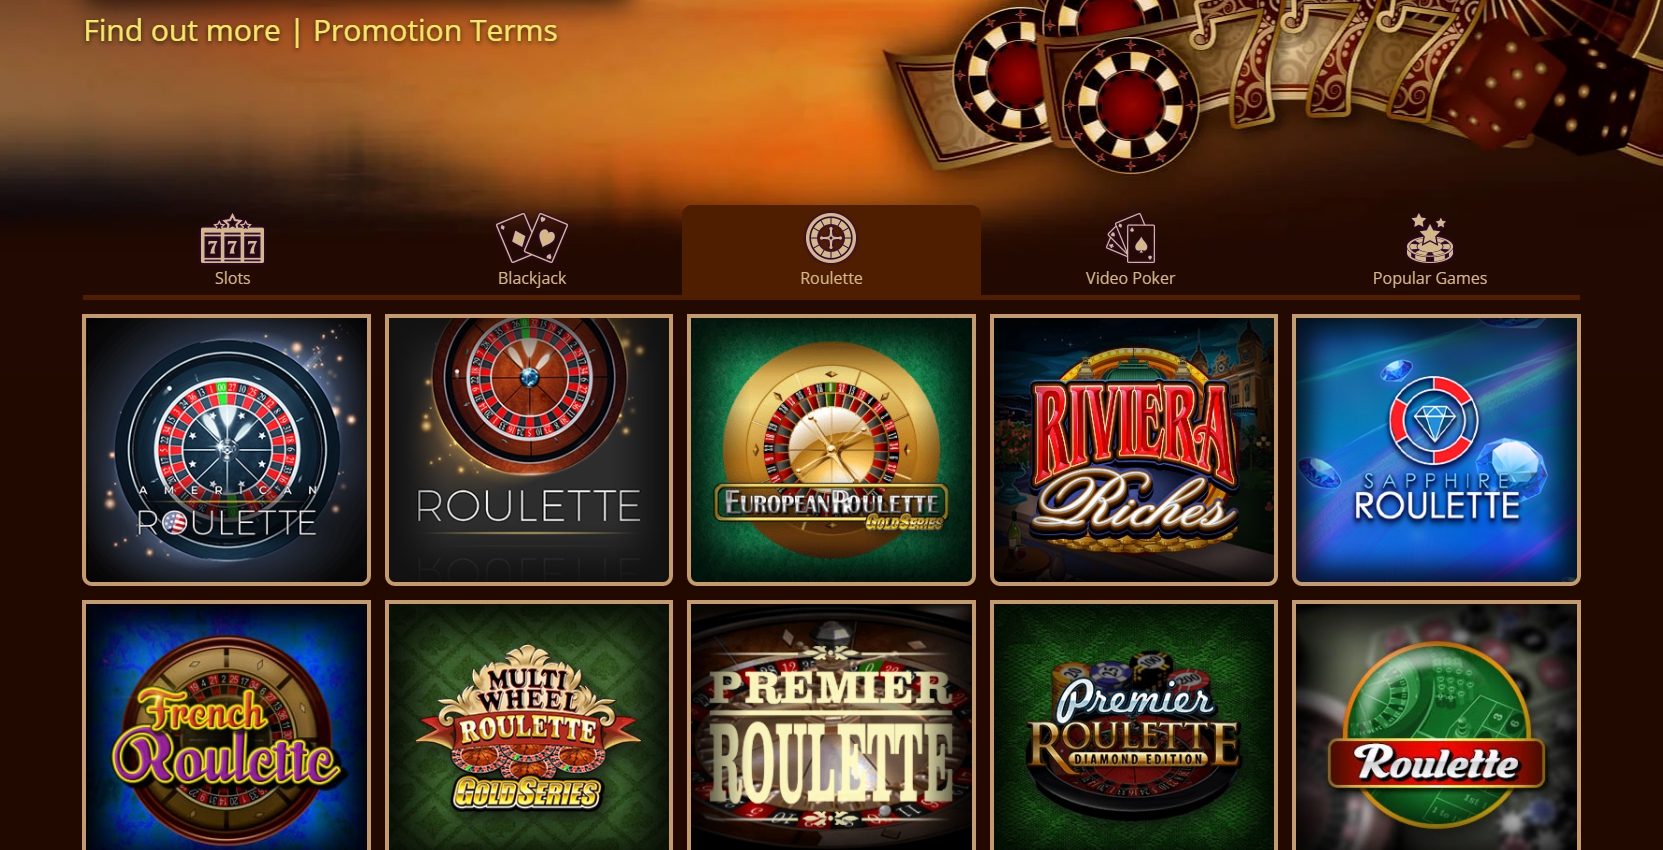 River Belle Casino Games